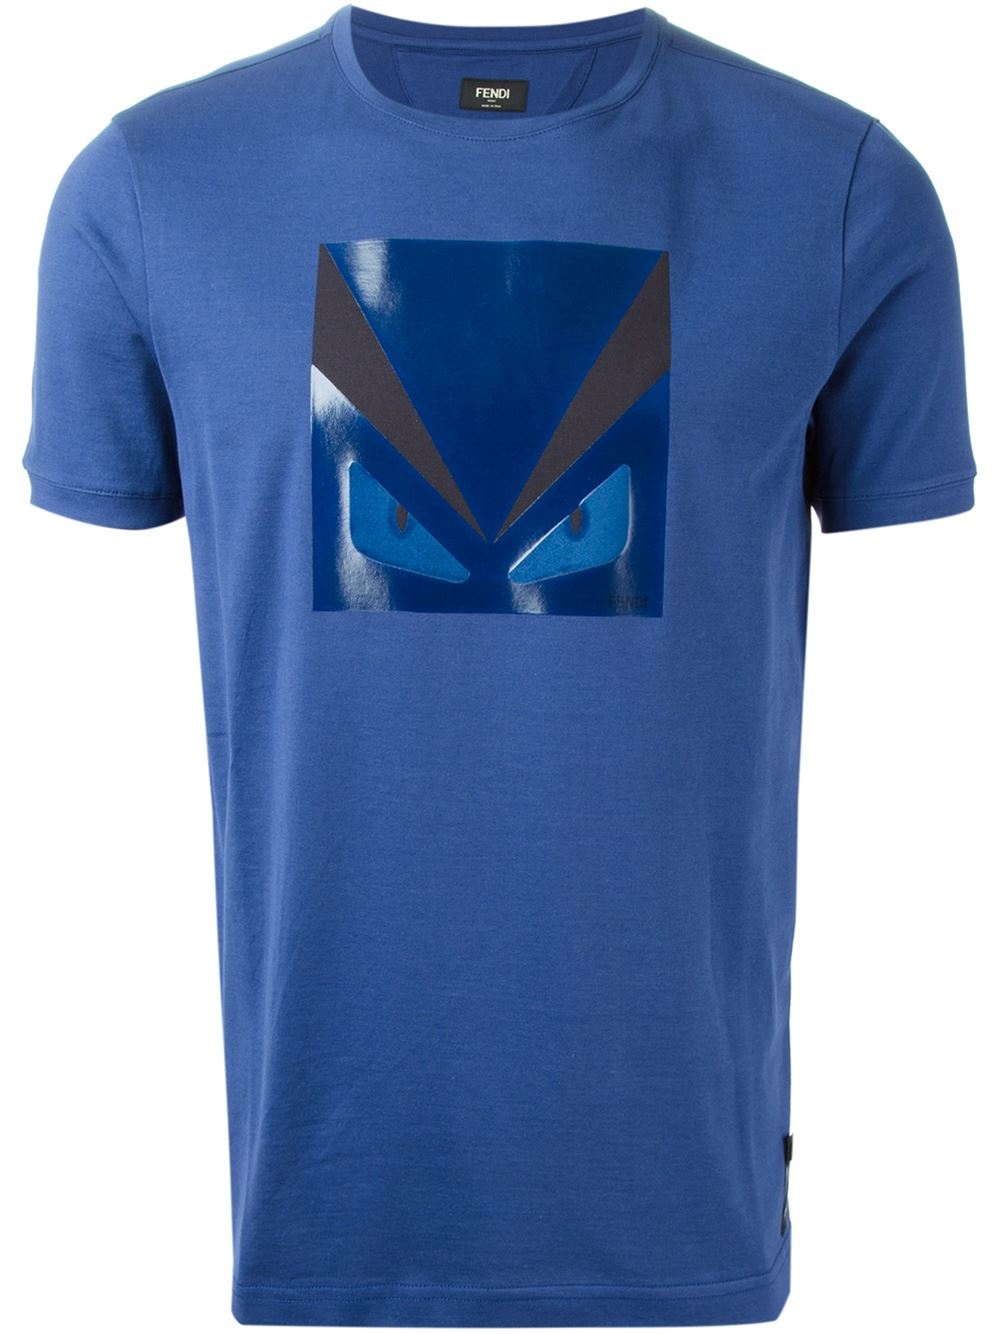 Fendi Shirt The Art Of Mike Mignola - fendi shirt roblox the art of mike mignola